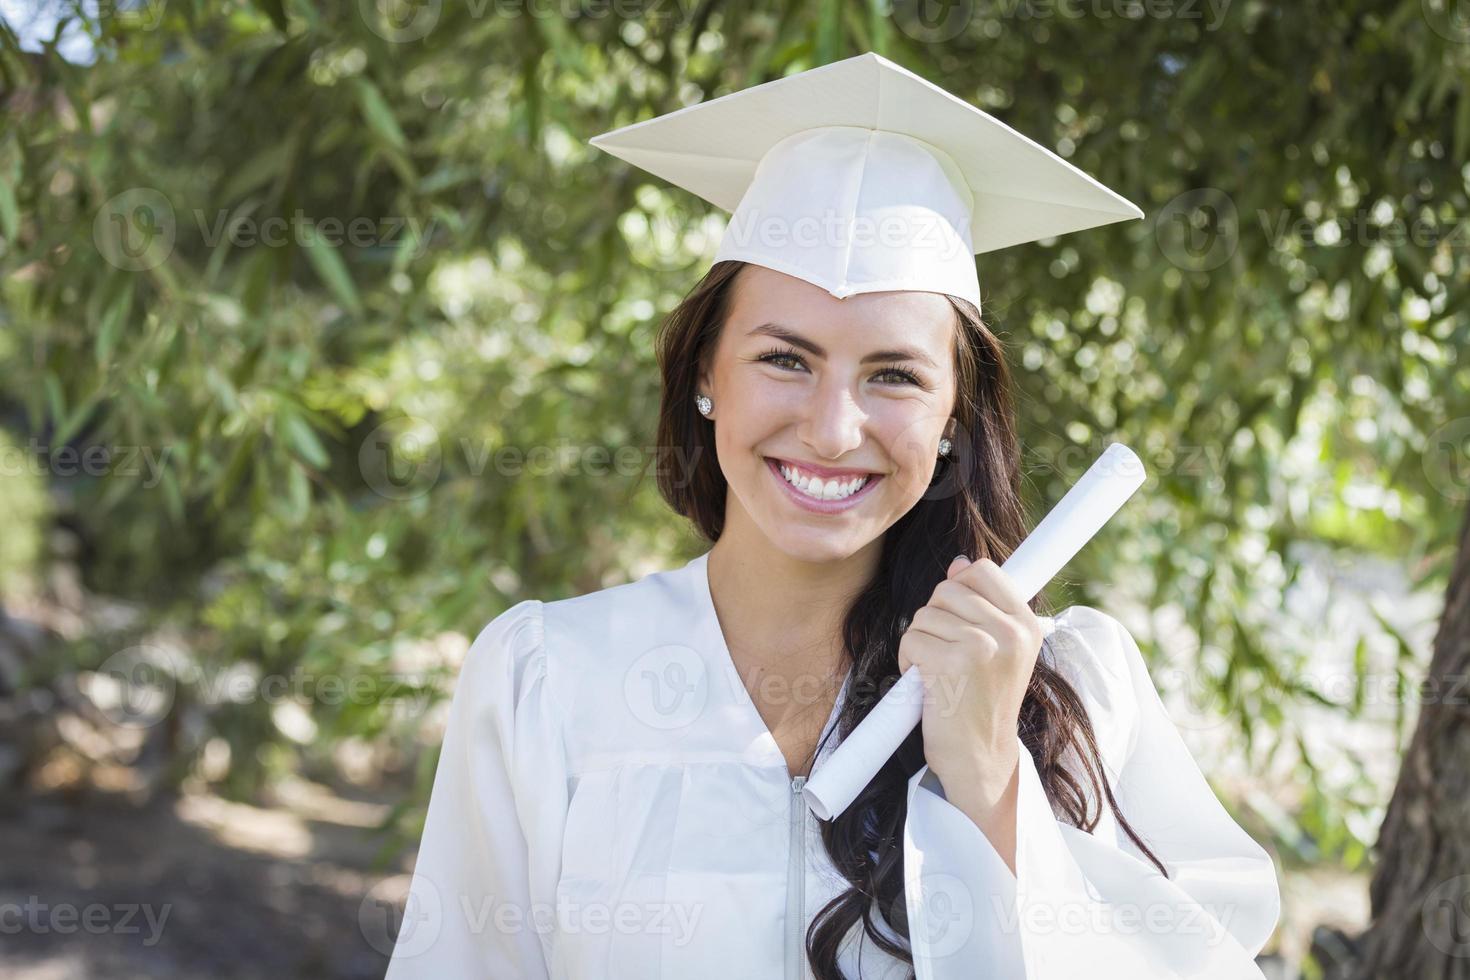 fille métisse diplômée en bonnet et robe avec diplôme photo